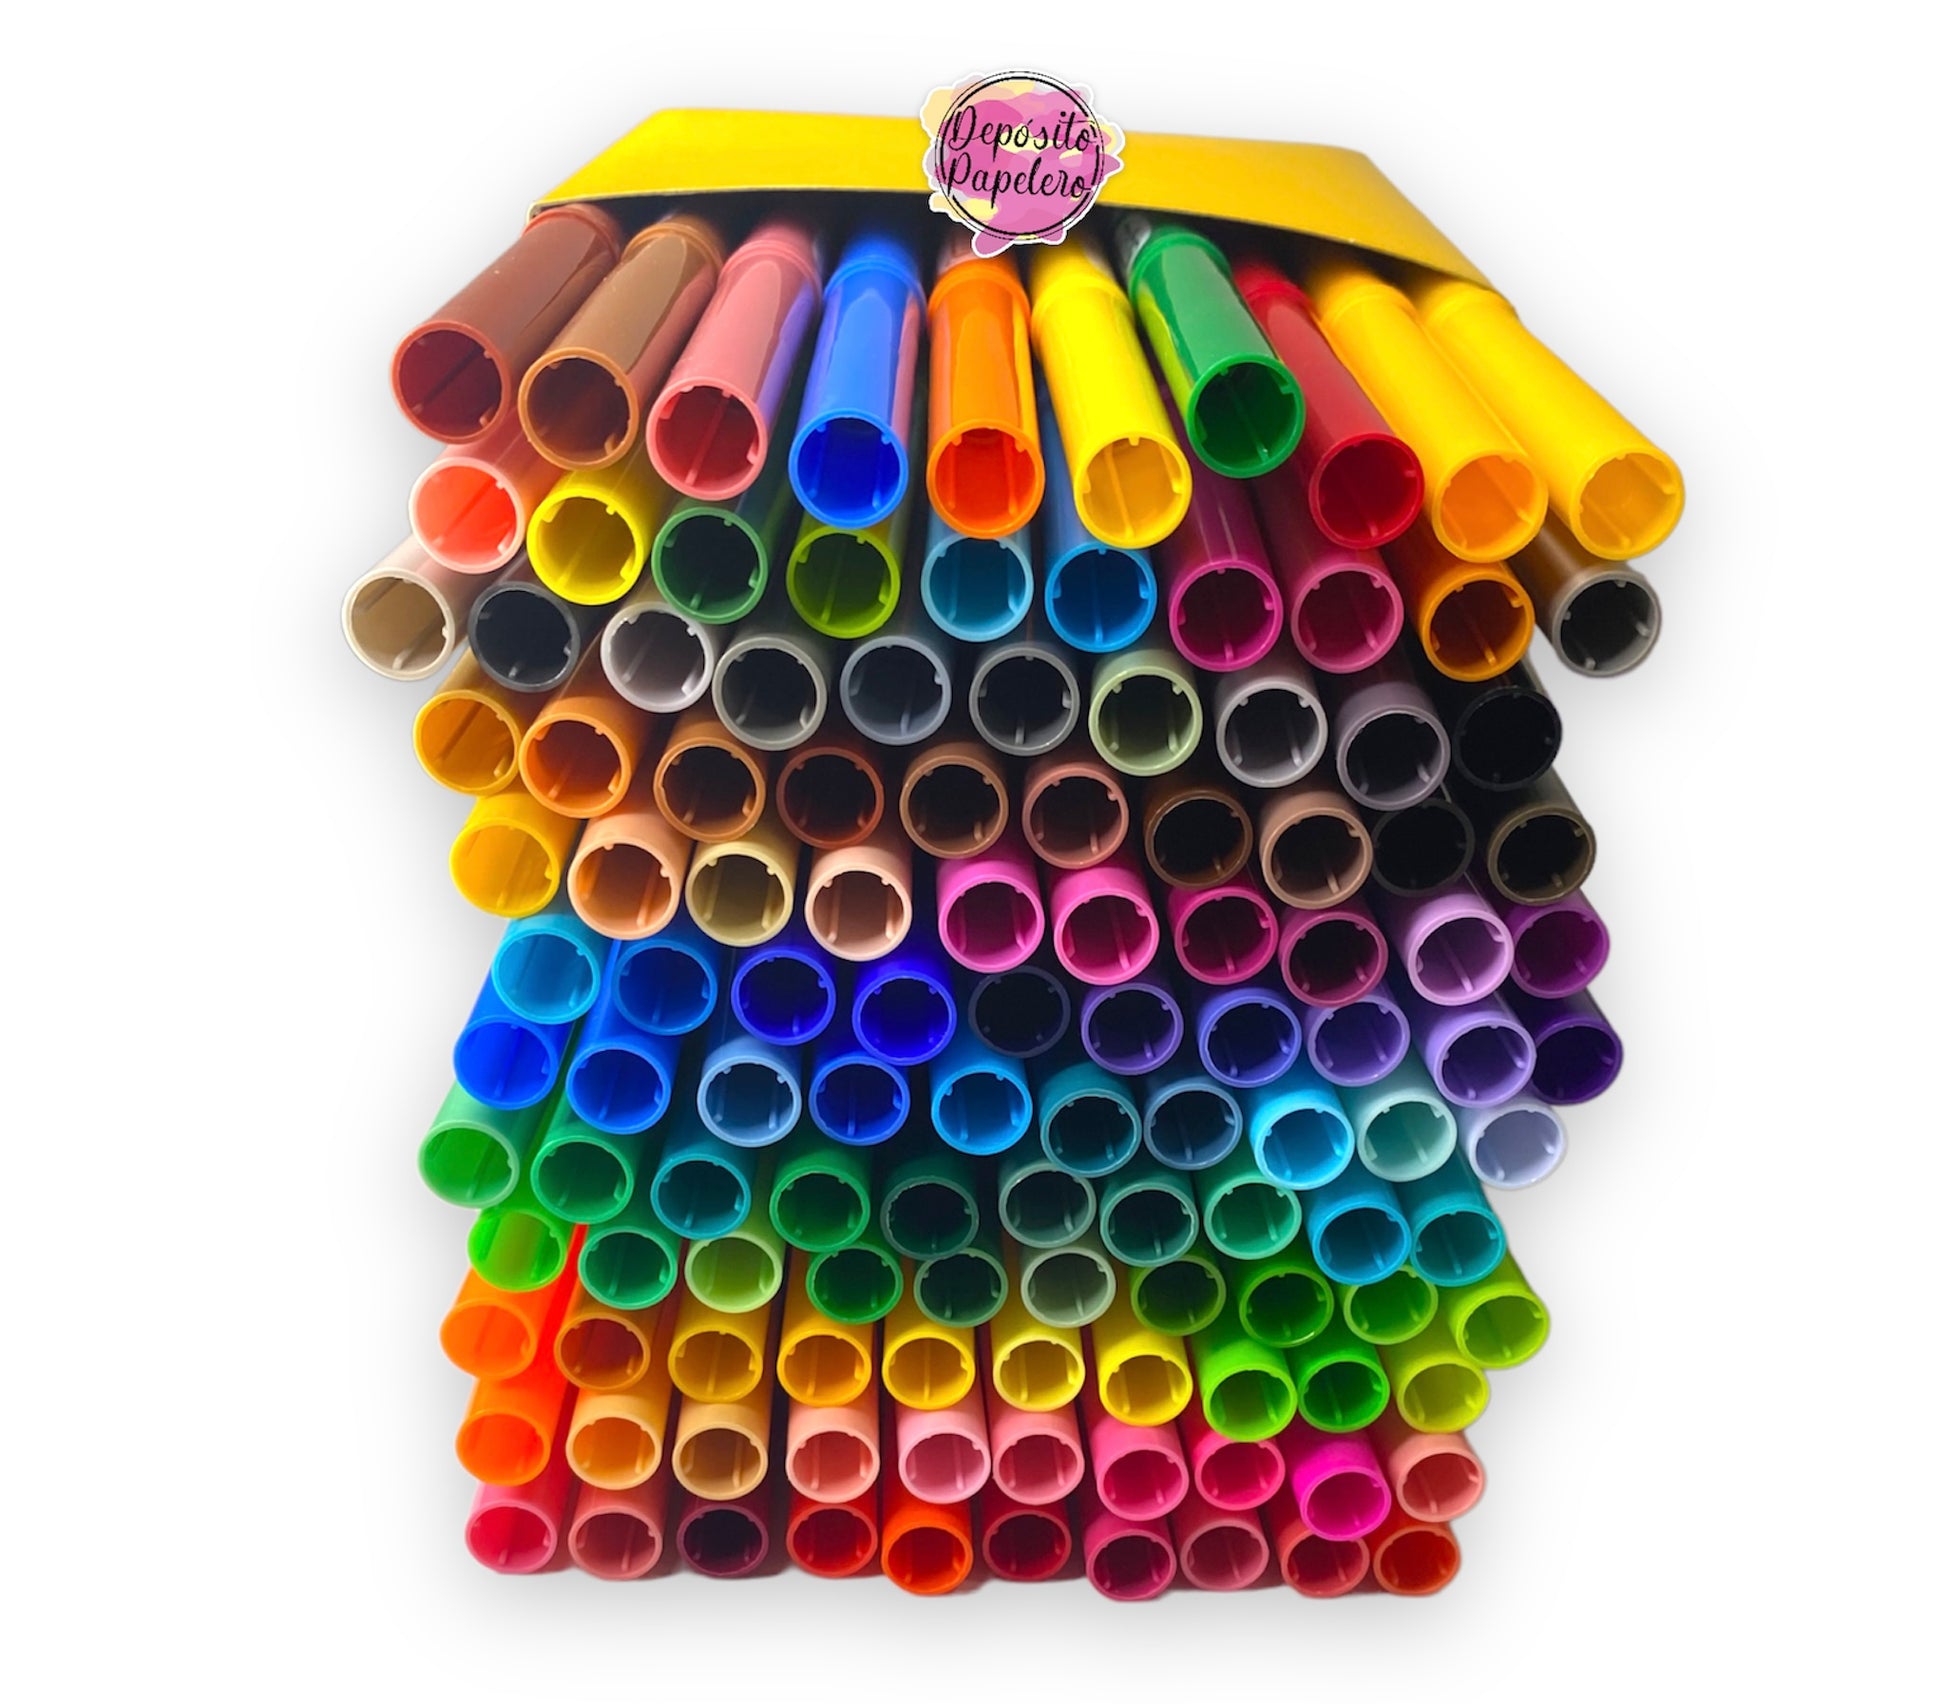 Crayola SuperTips 100 + 20 Silly Scentes – Depósito Papelero